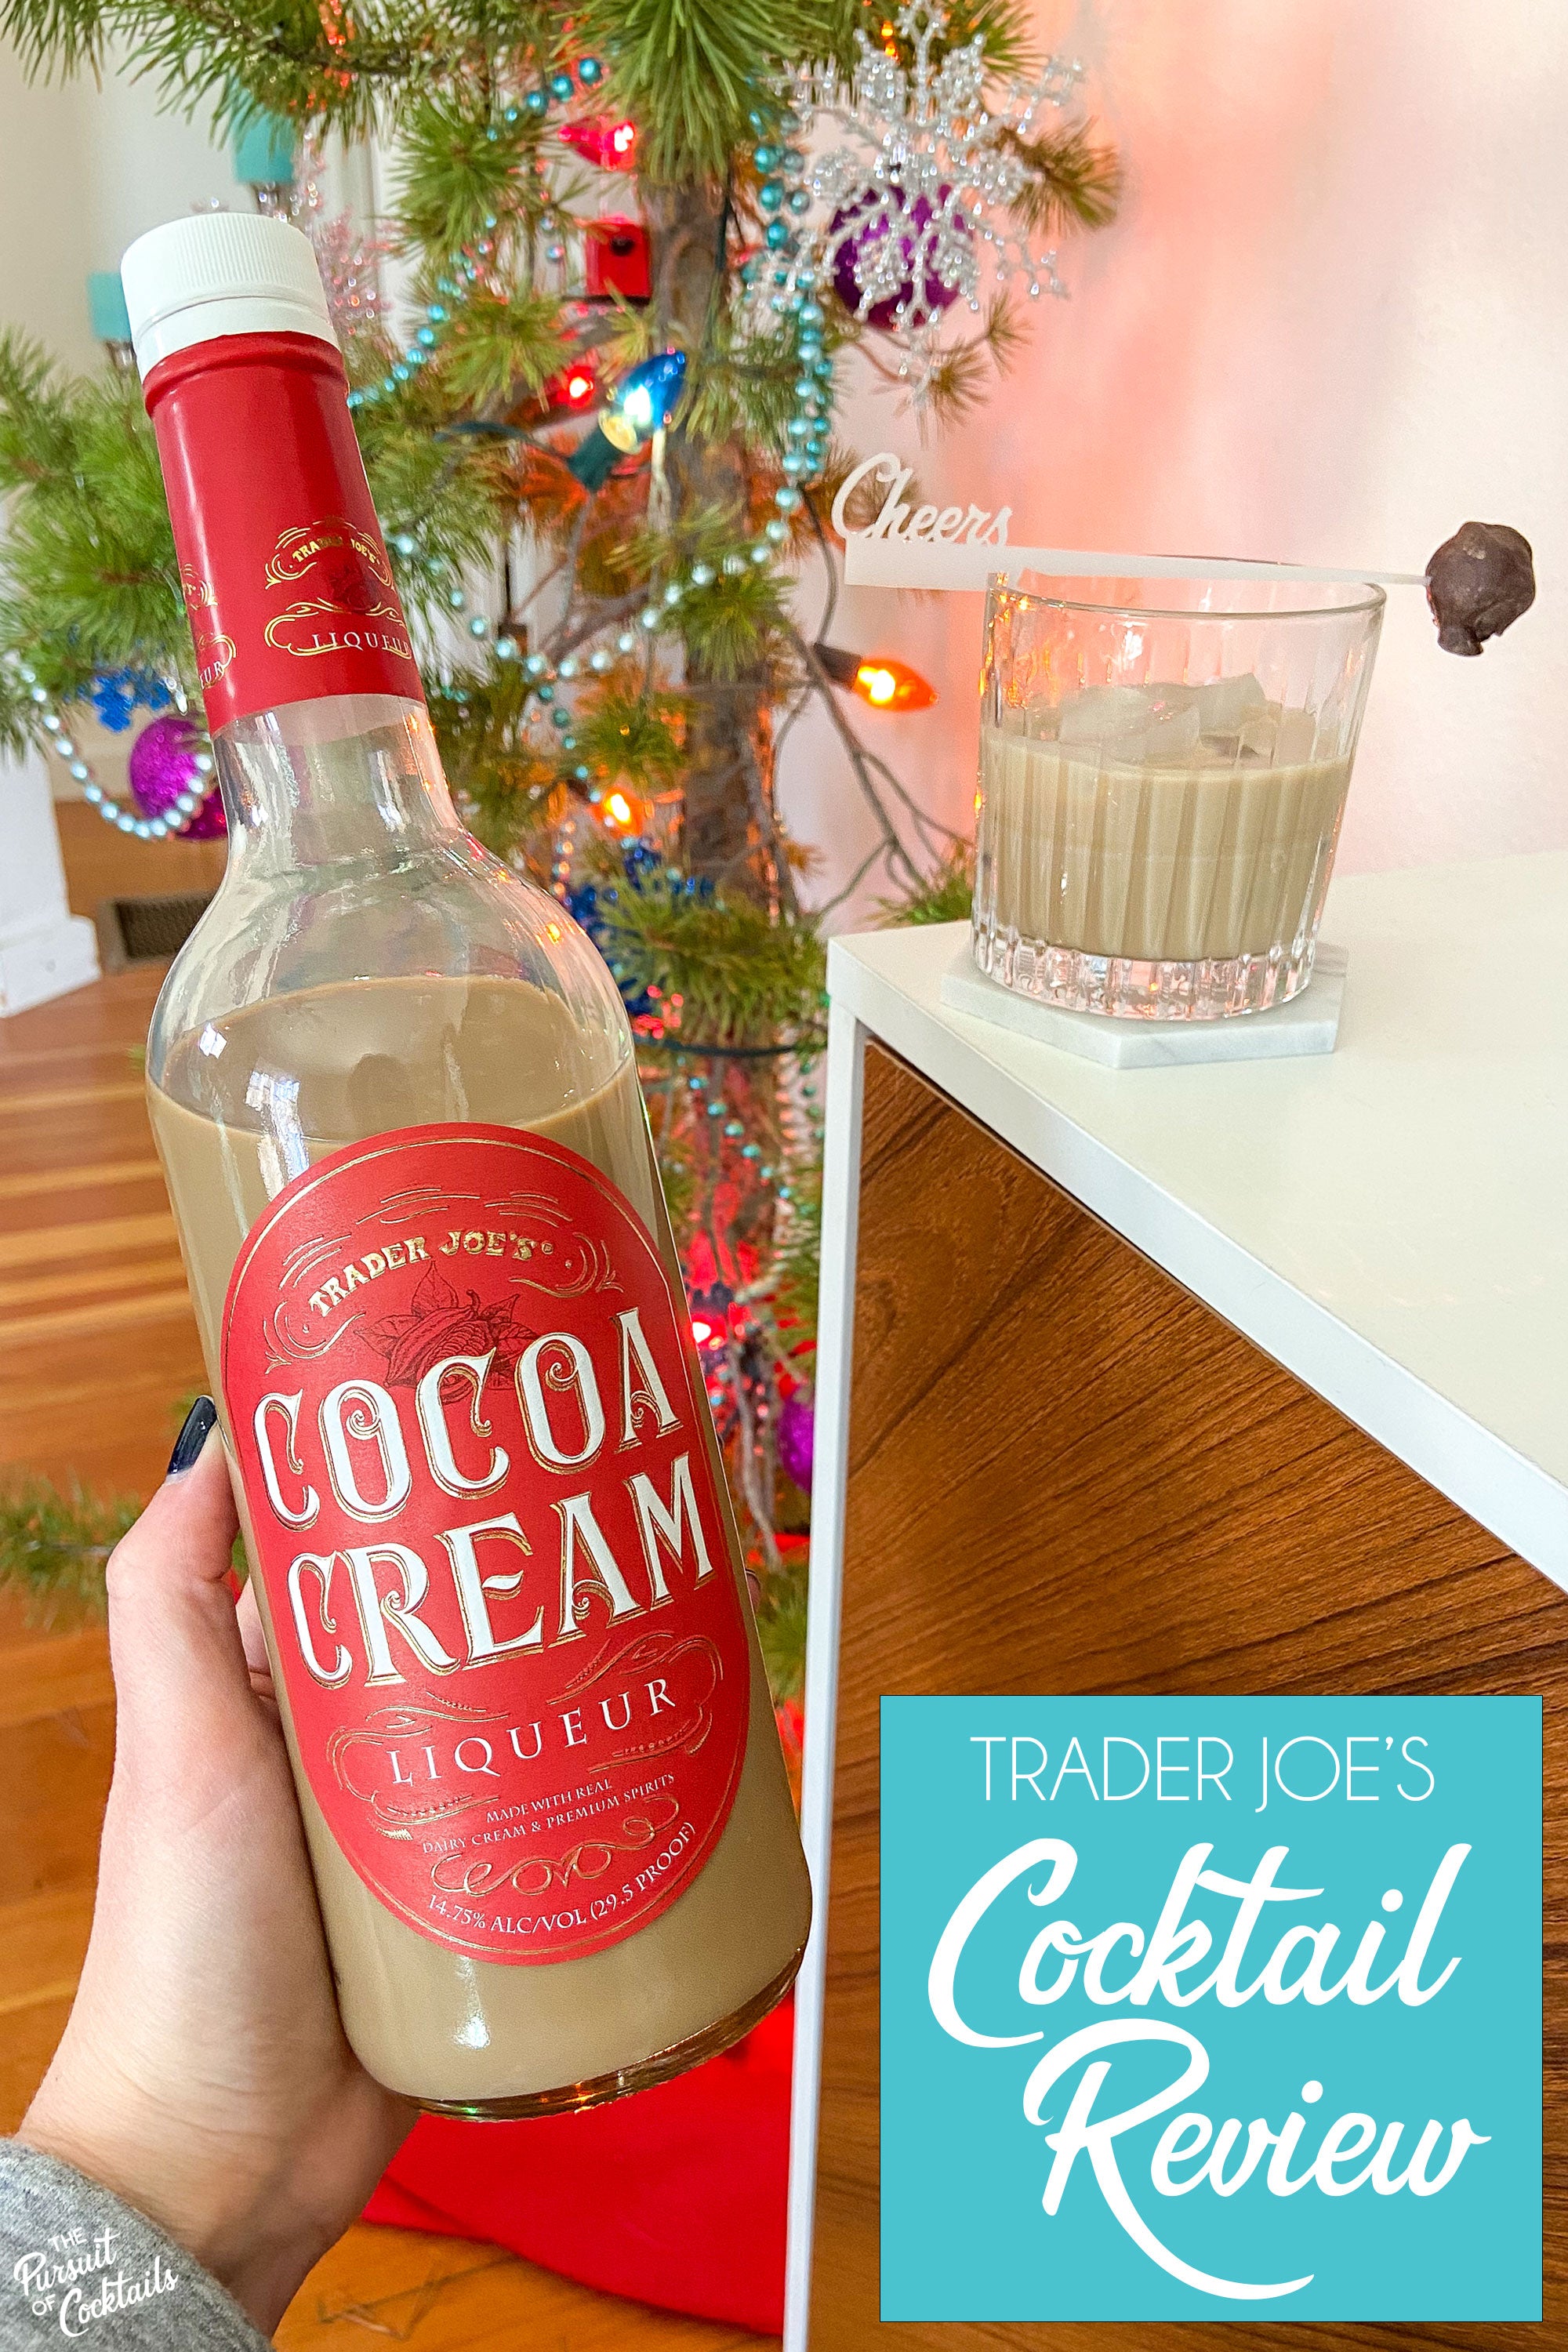 Trader Joe's Cocktail Review: Cocoa Cream Liqueur – The Pursuit of Cocktails